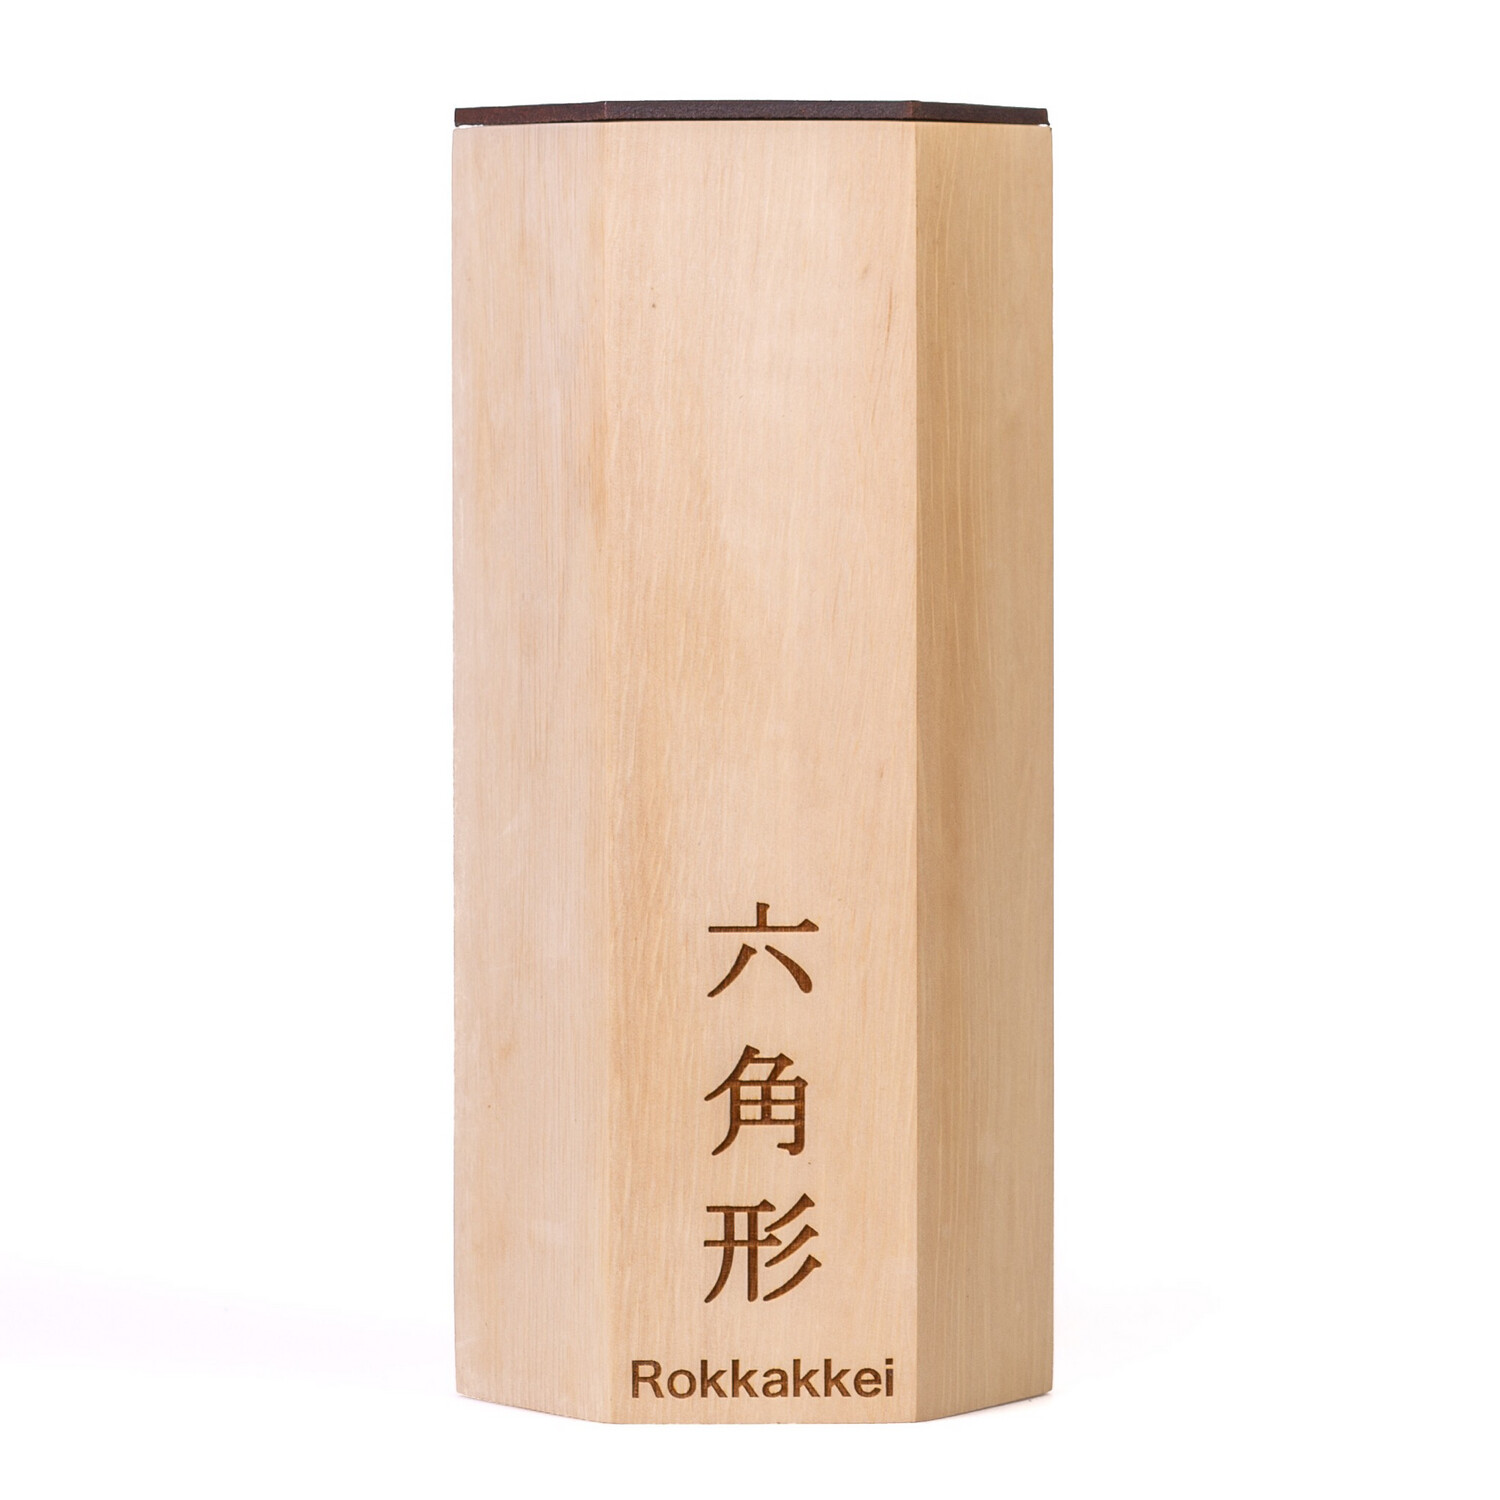 Rokkakkei large Light wood